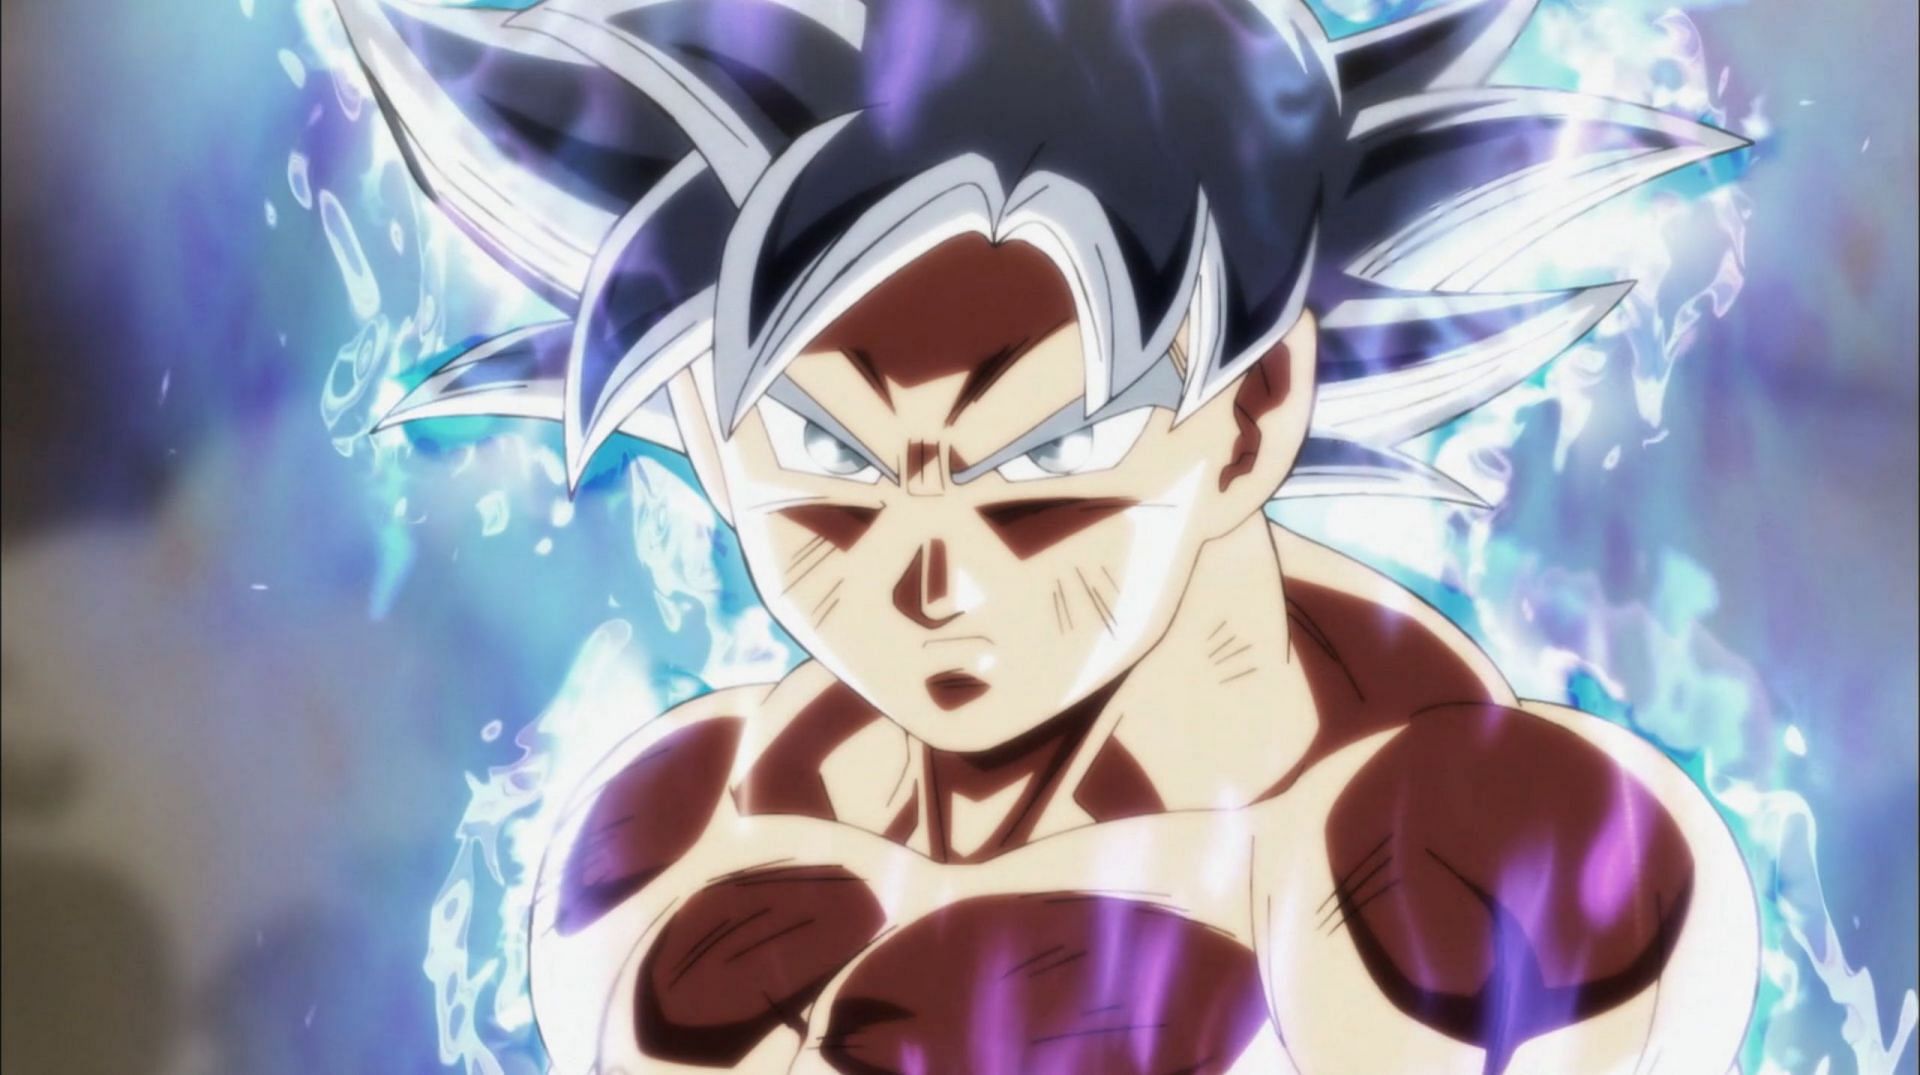 Goku in Ultra Instinct, his highest power up so far